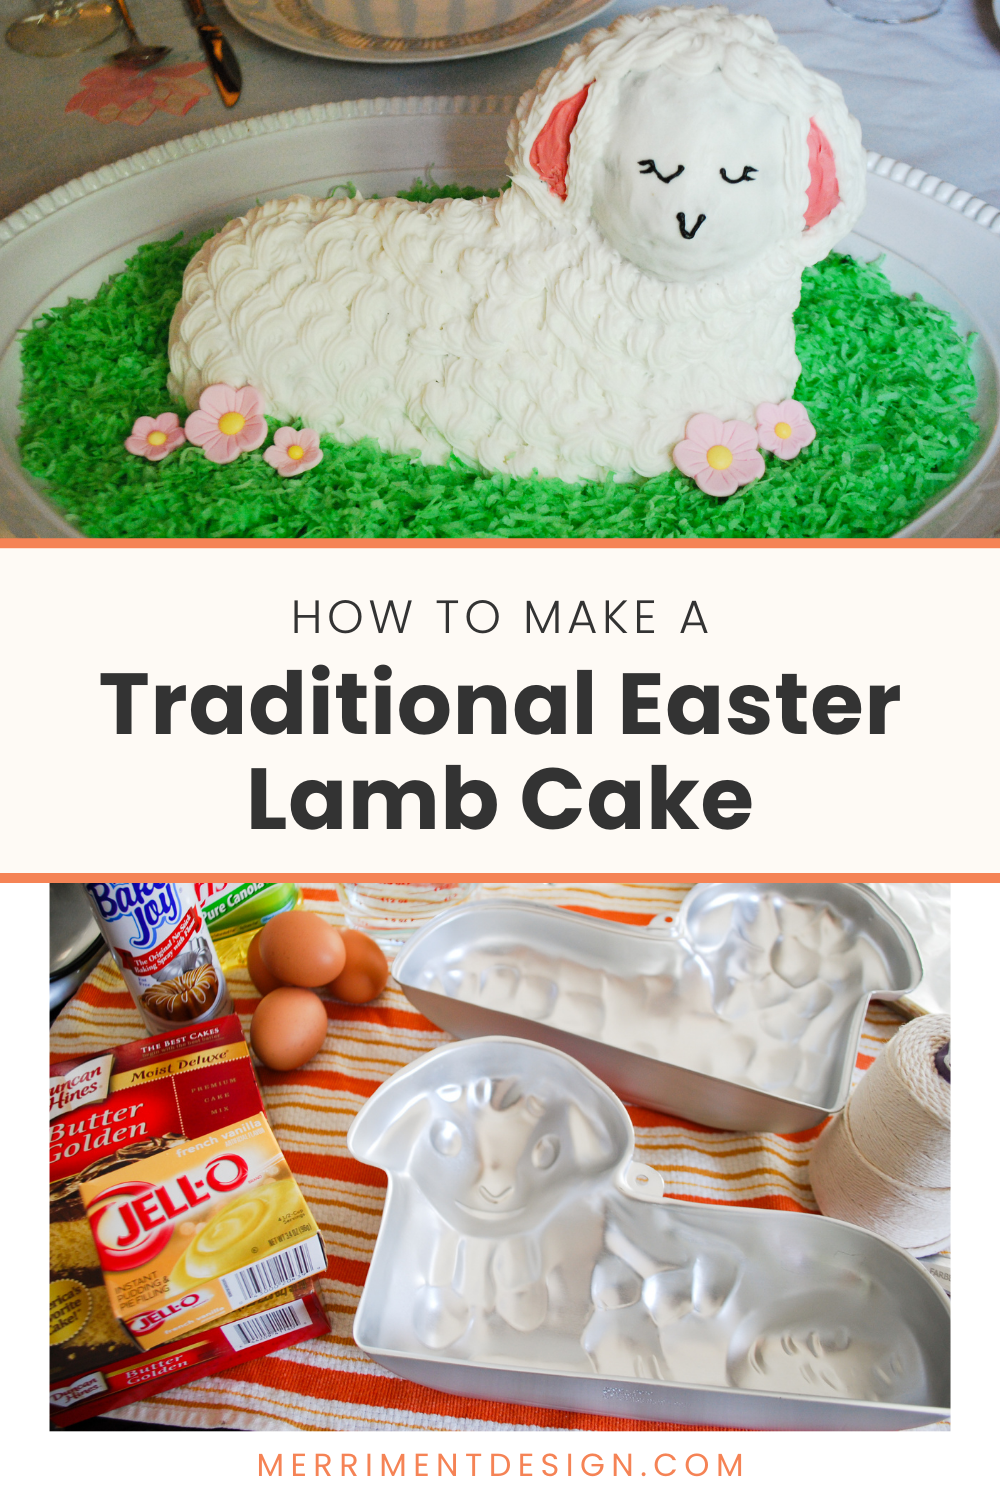 Lamb cake for Easter using a traditional lamb cake pan